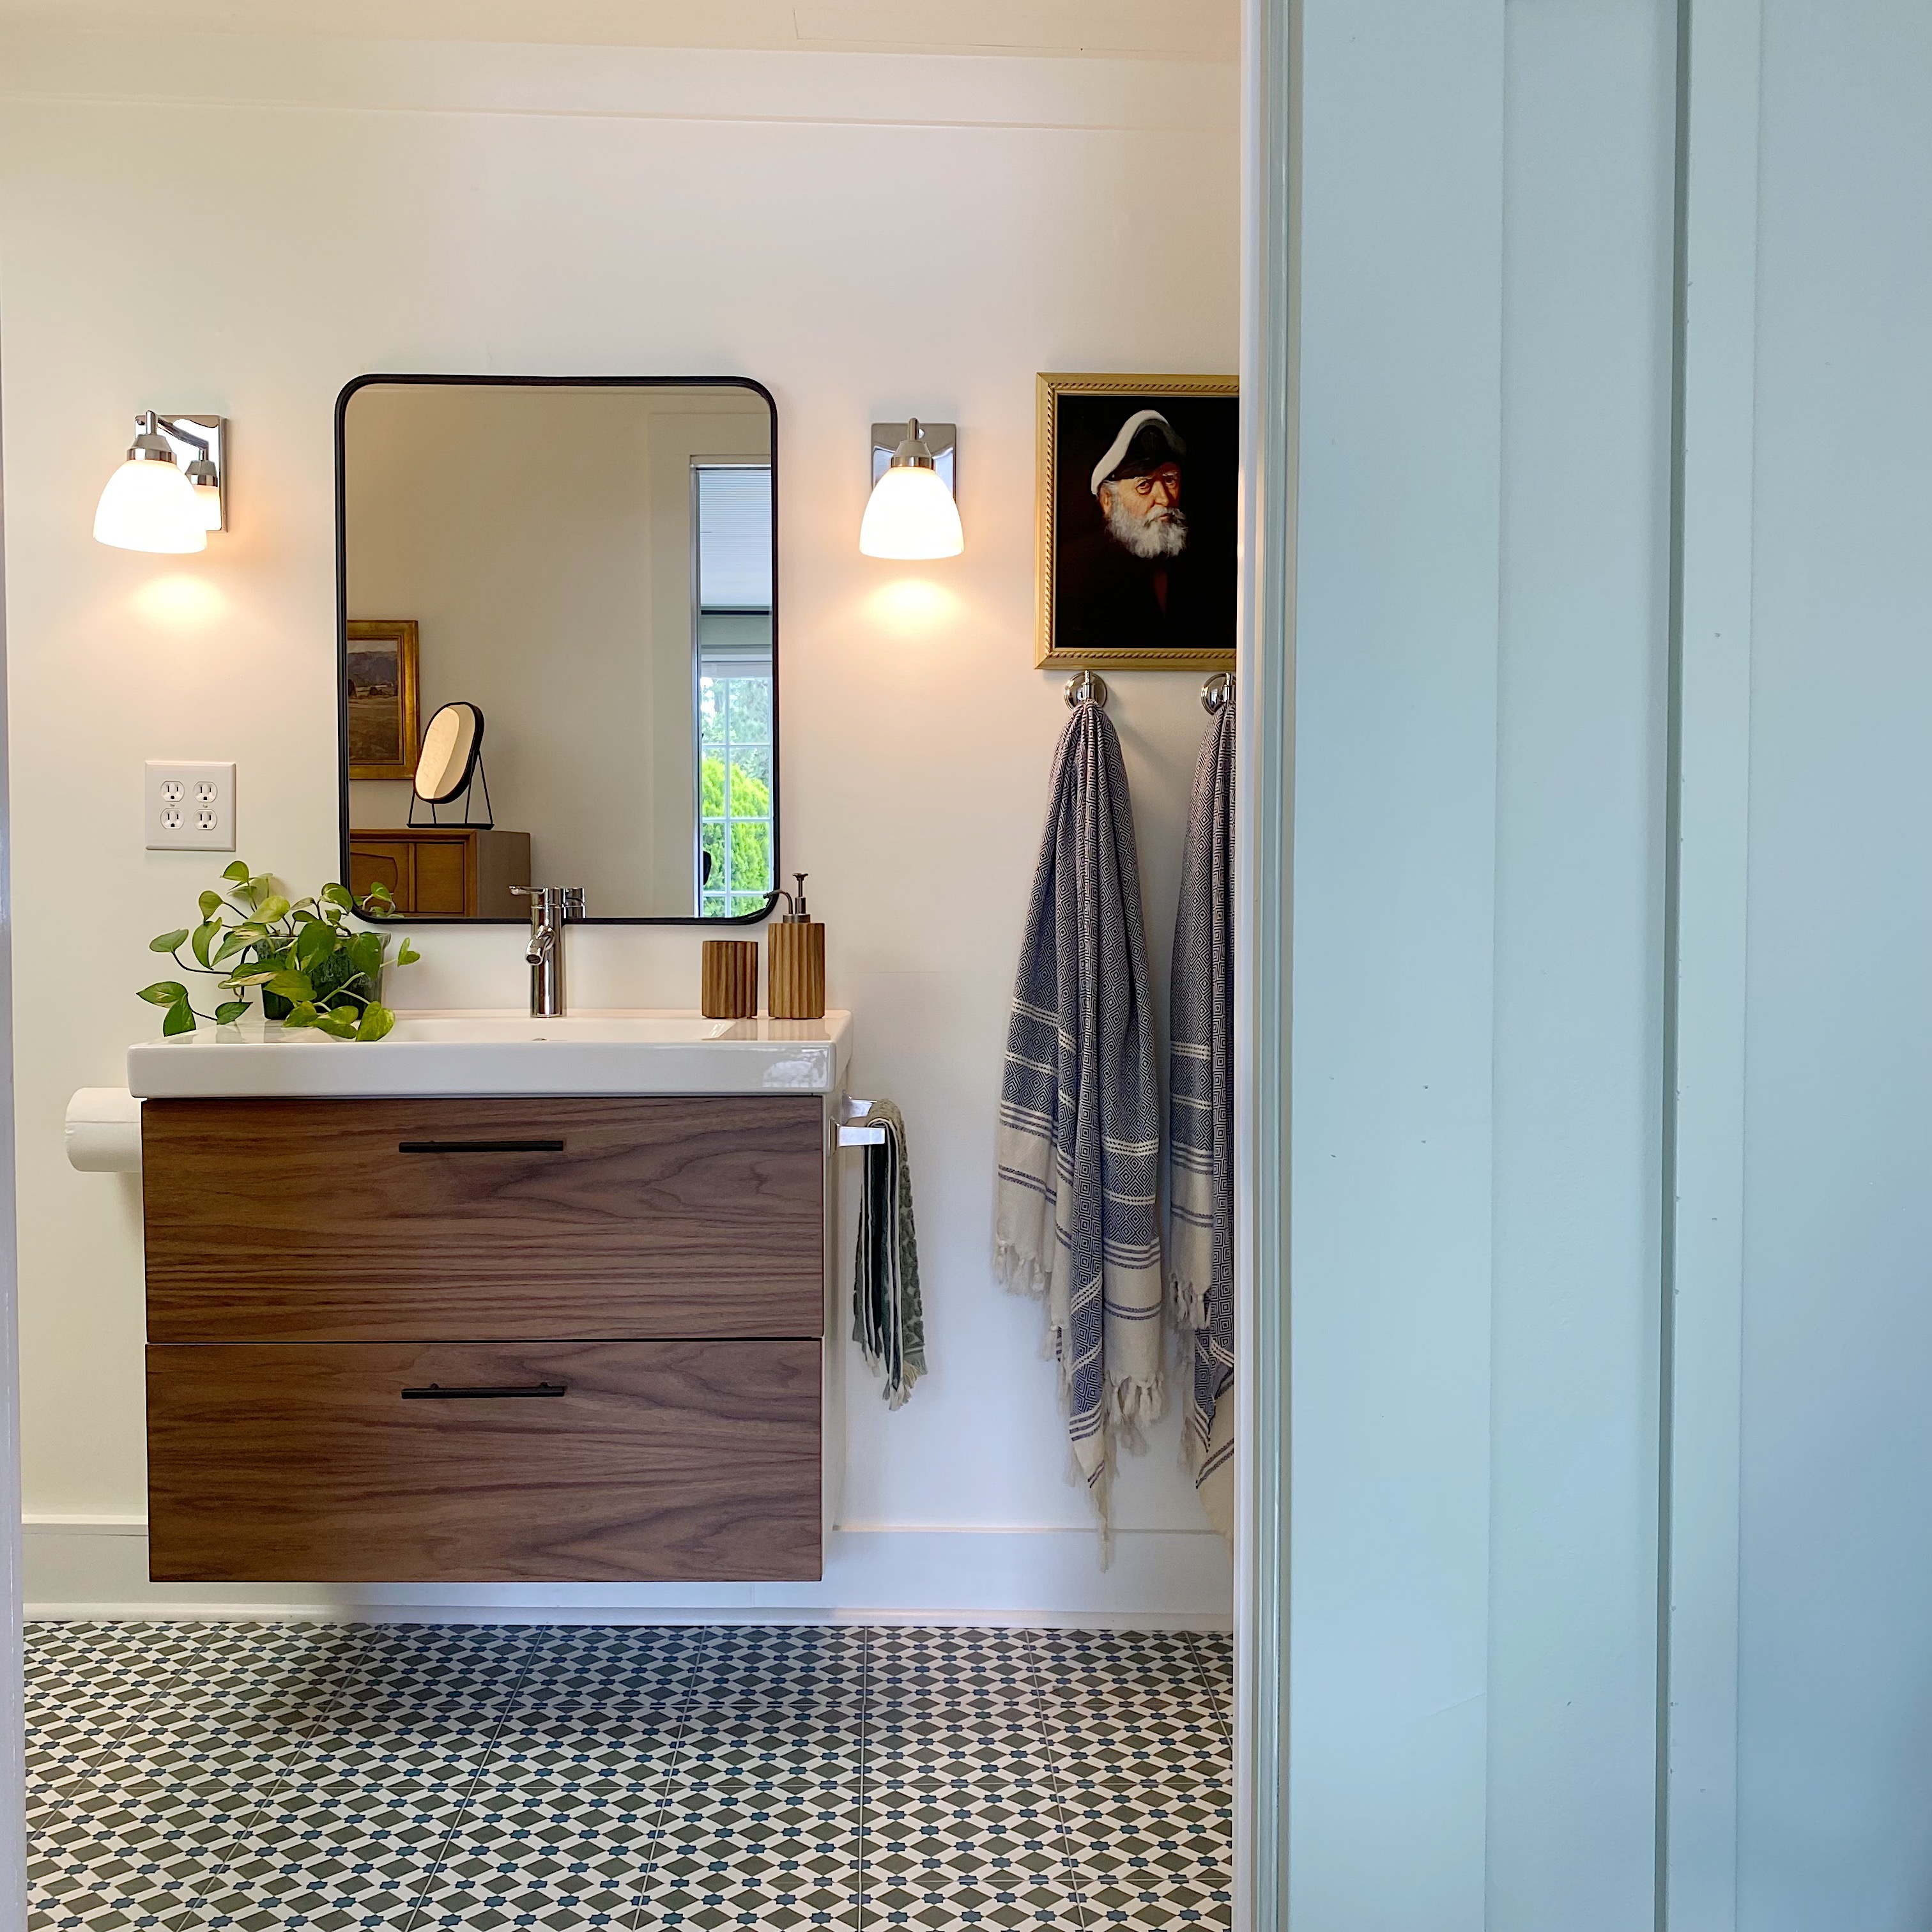 Guest Cottage Bathroom Reveal – One Room Challenge Week #5